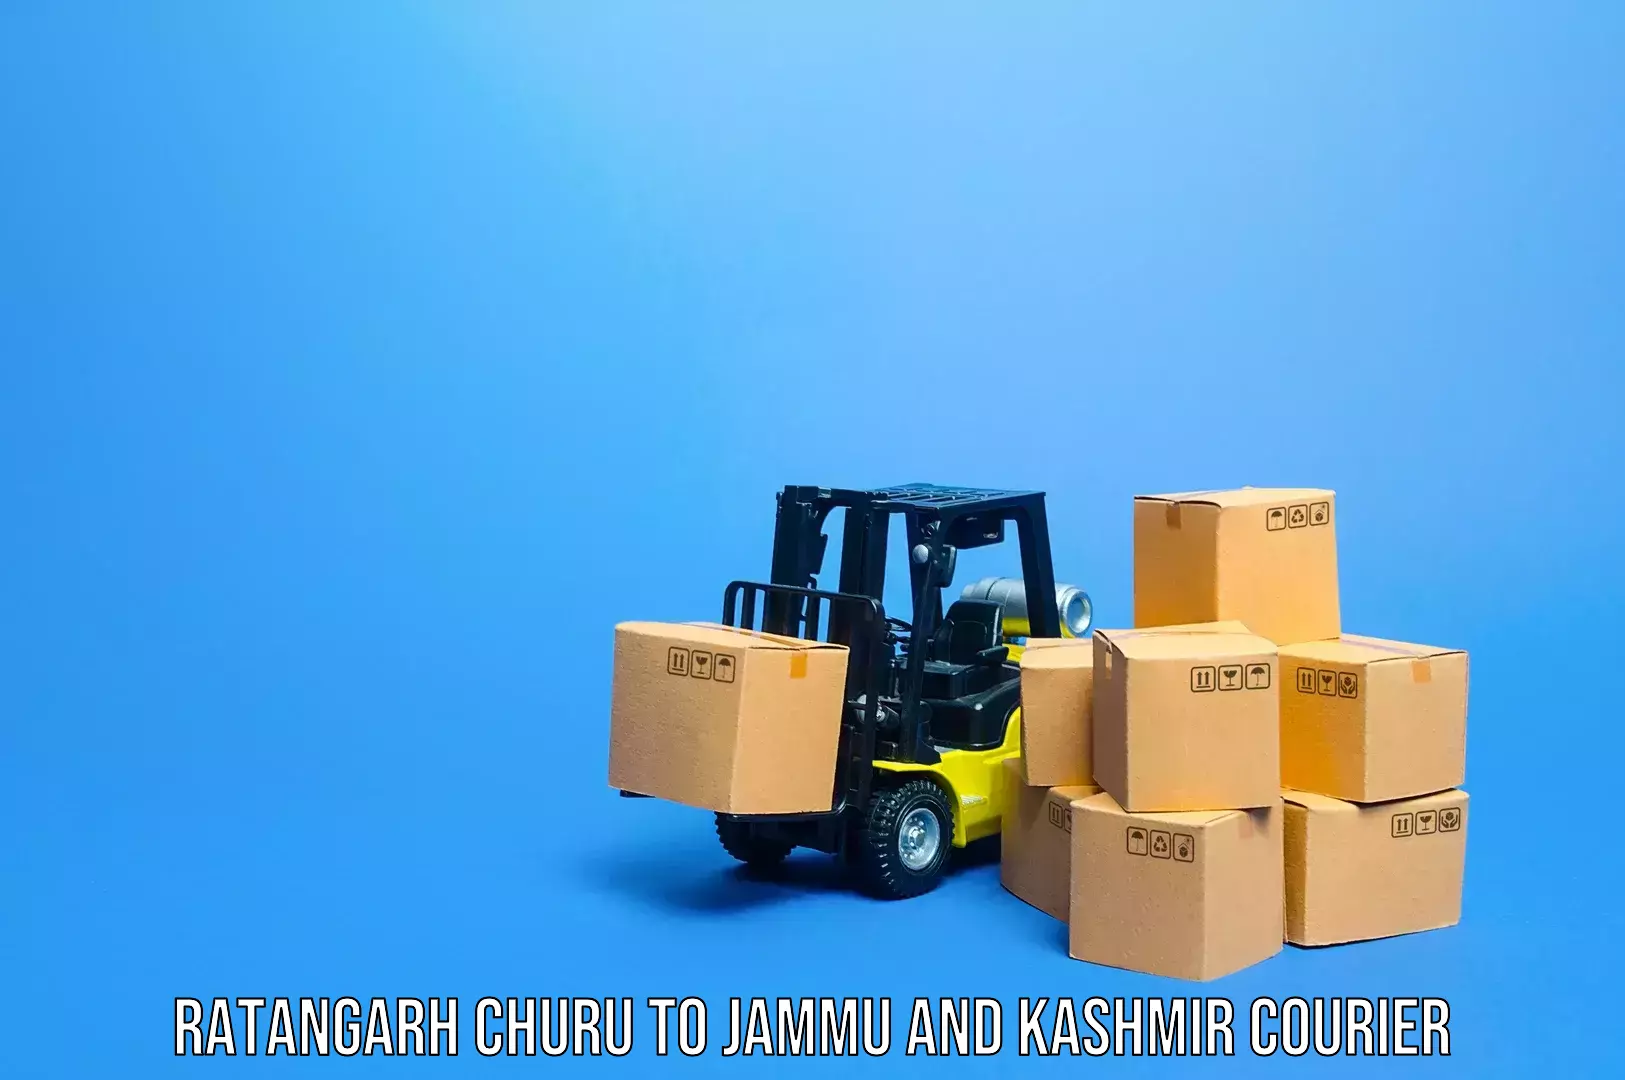 Luggage delivery network Ratangarh Churu to Budgam